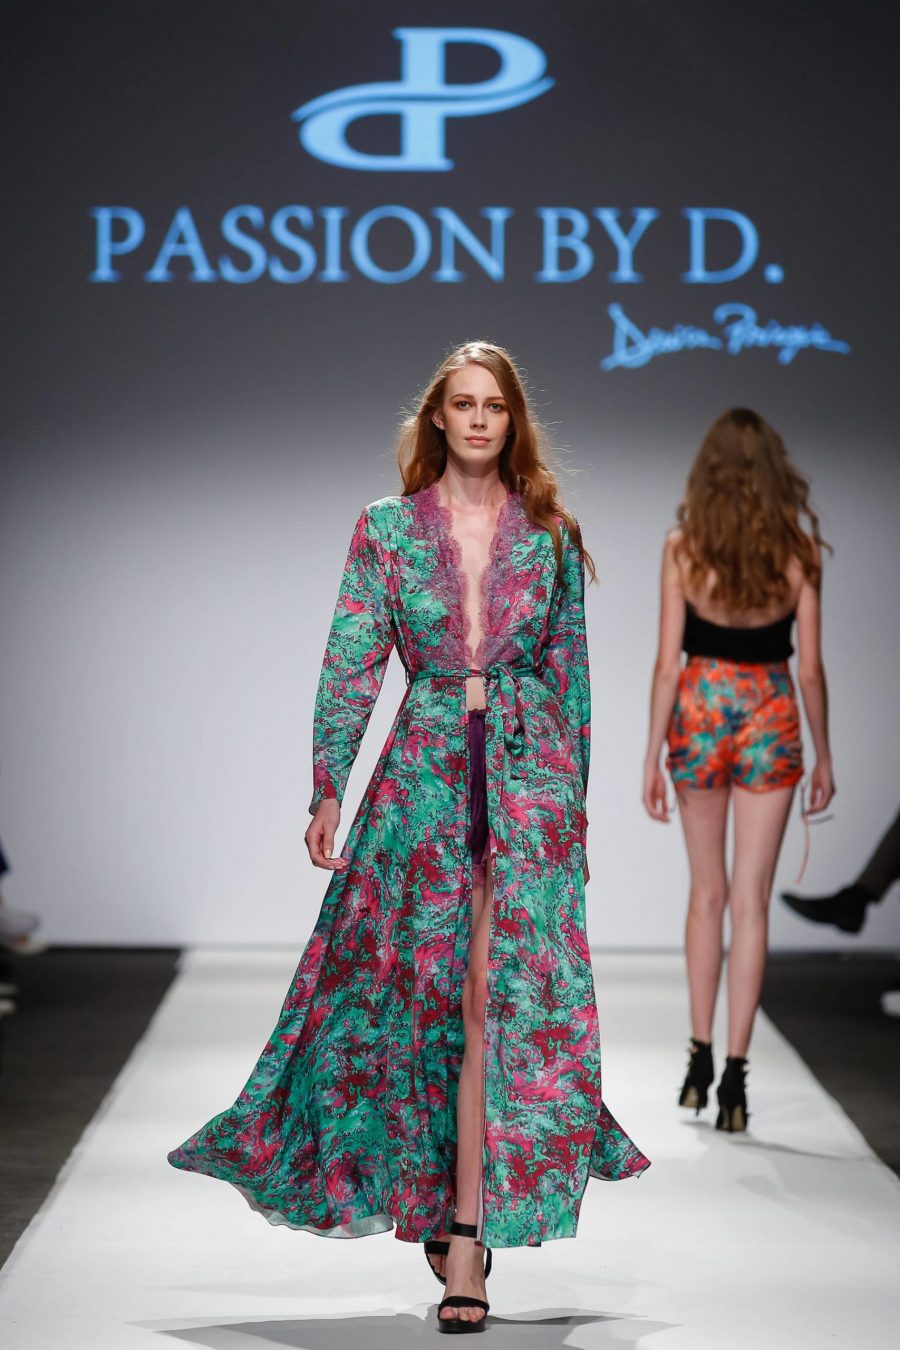 Fashion Show Vienna Fashion week 2019 - Passion by D